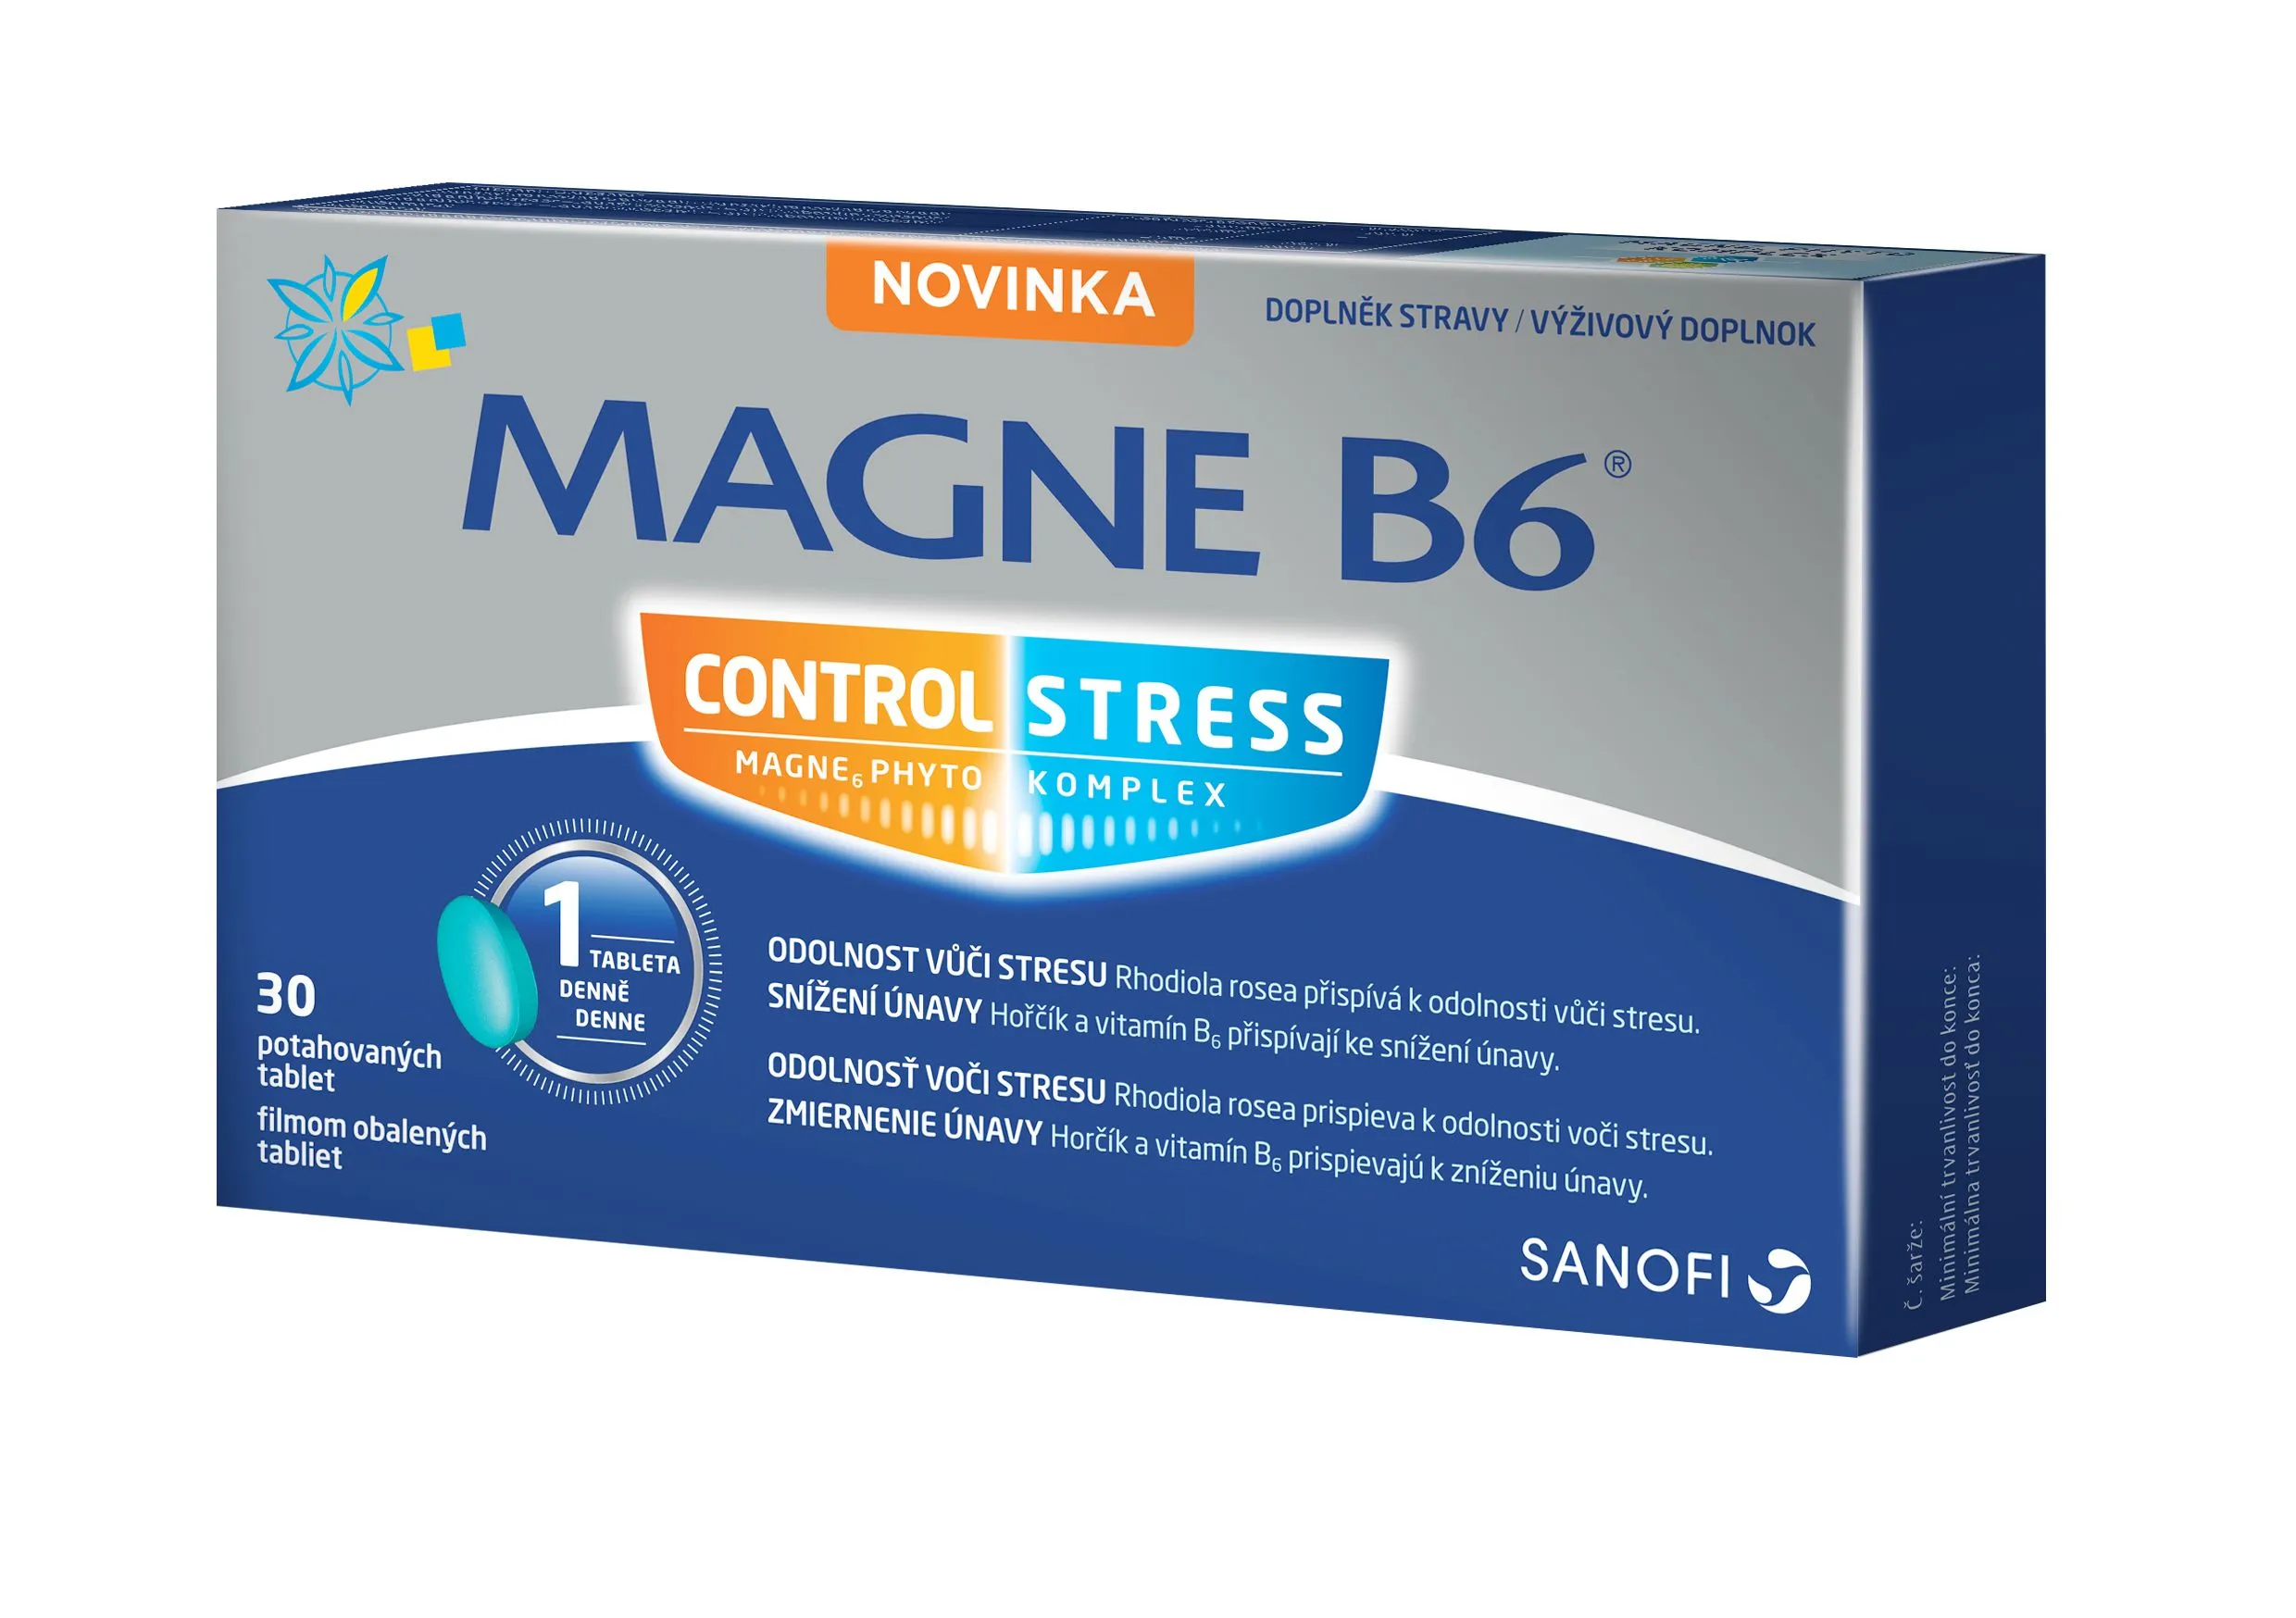 Magne B6 Forte Plus 30 tablet